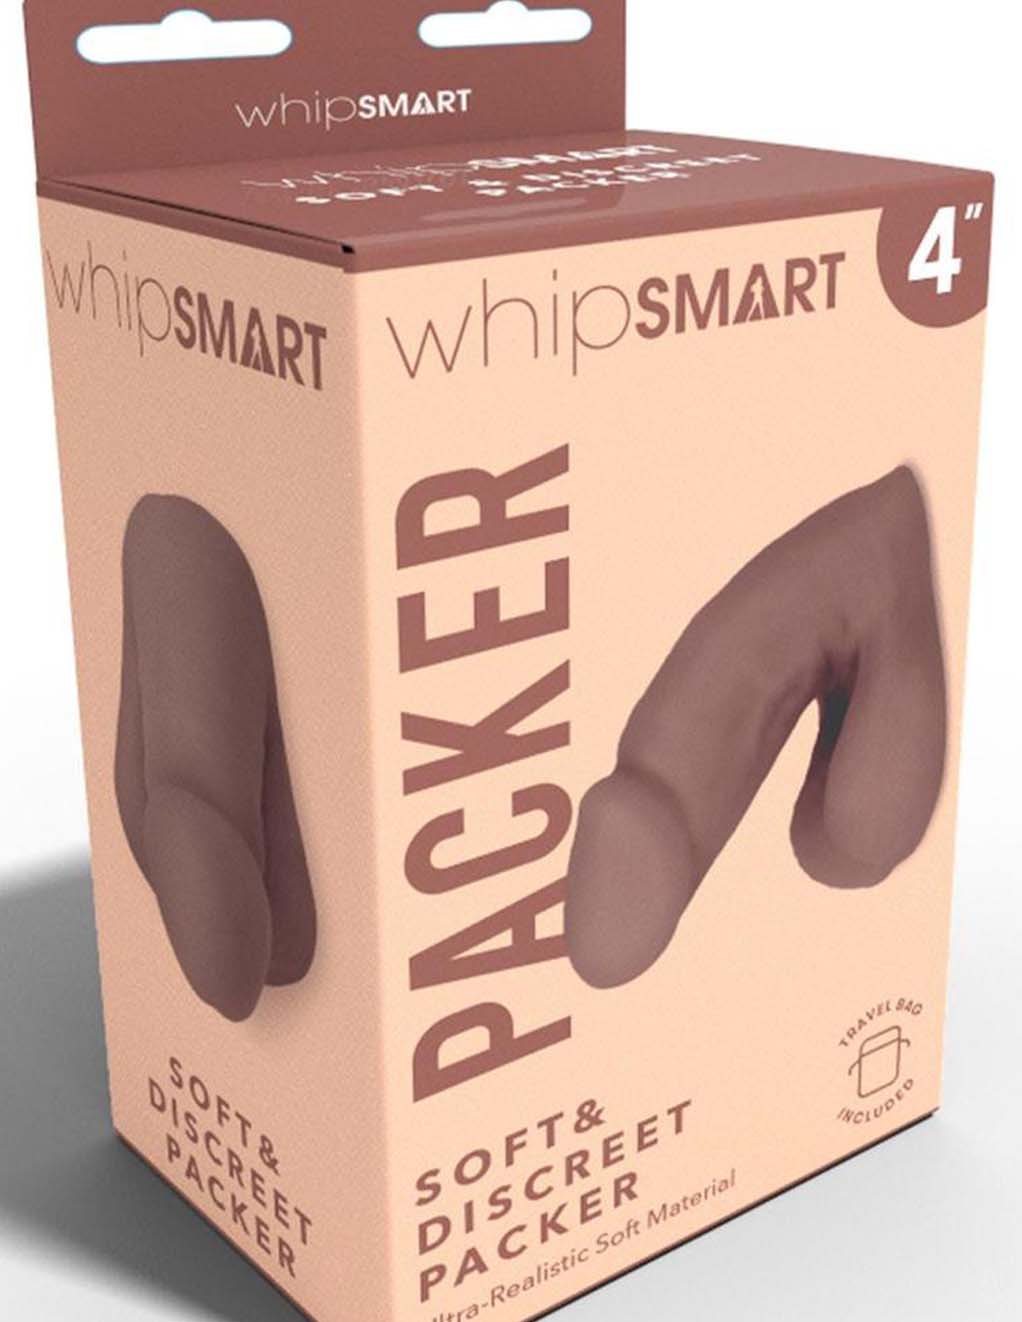 WhipSmart 4" Soft & Discreet Packer- Brown- Box